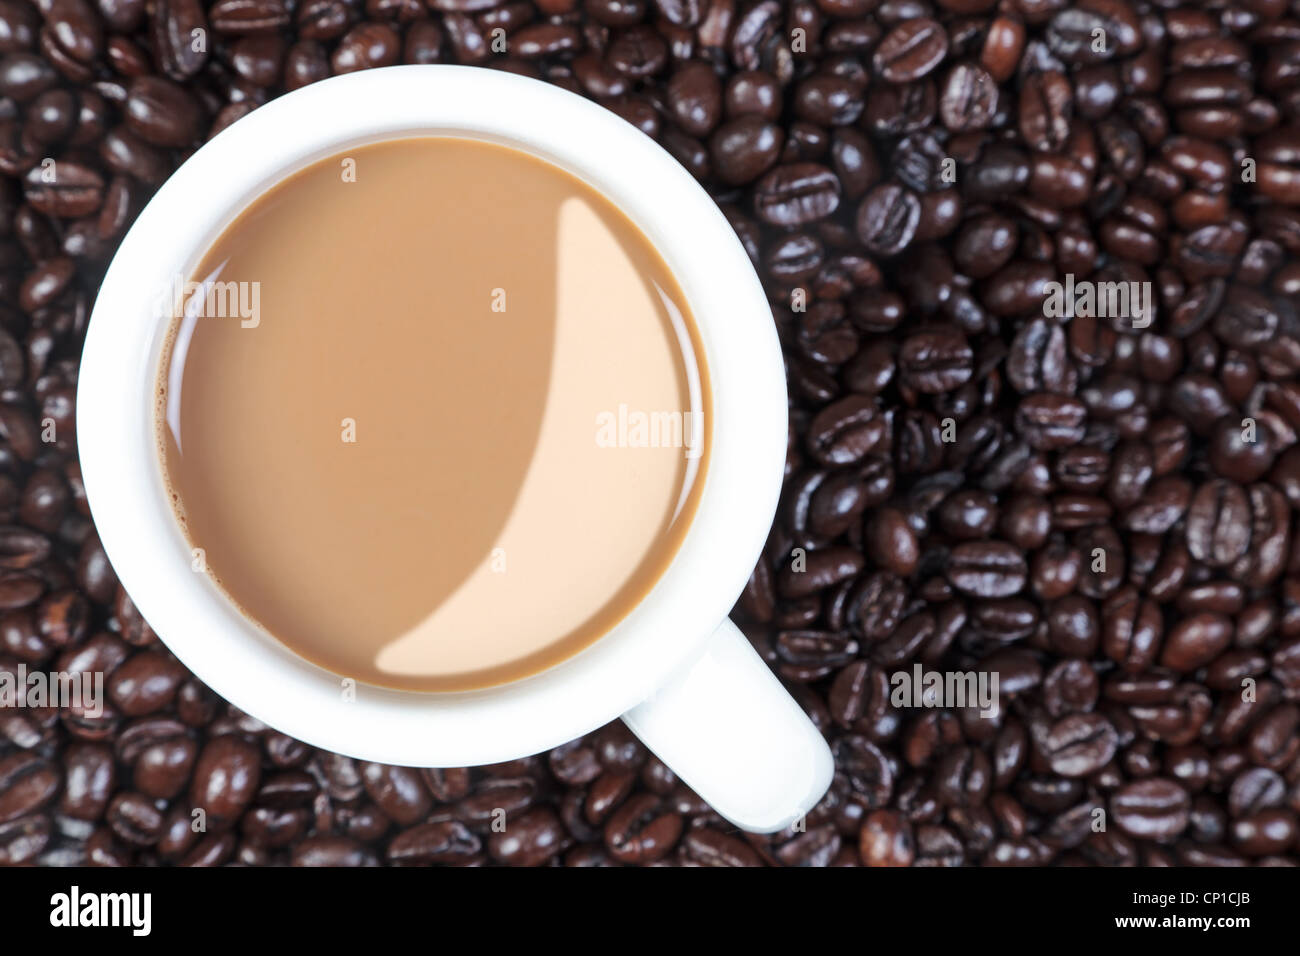 Foto aerea di una tazza piena di caffè caldo su una miscela di arabica e robusta i chicchi di caffè. Foto Stock